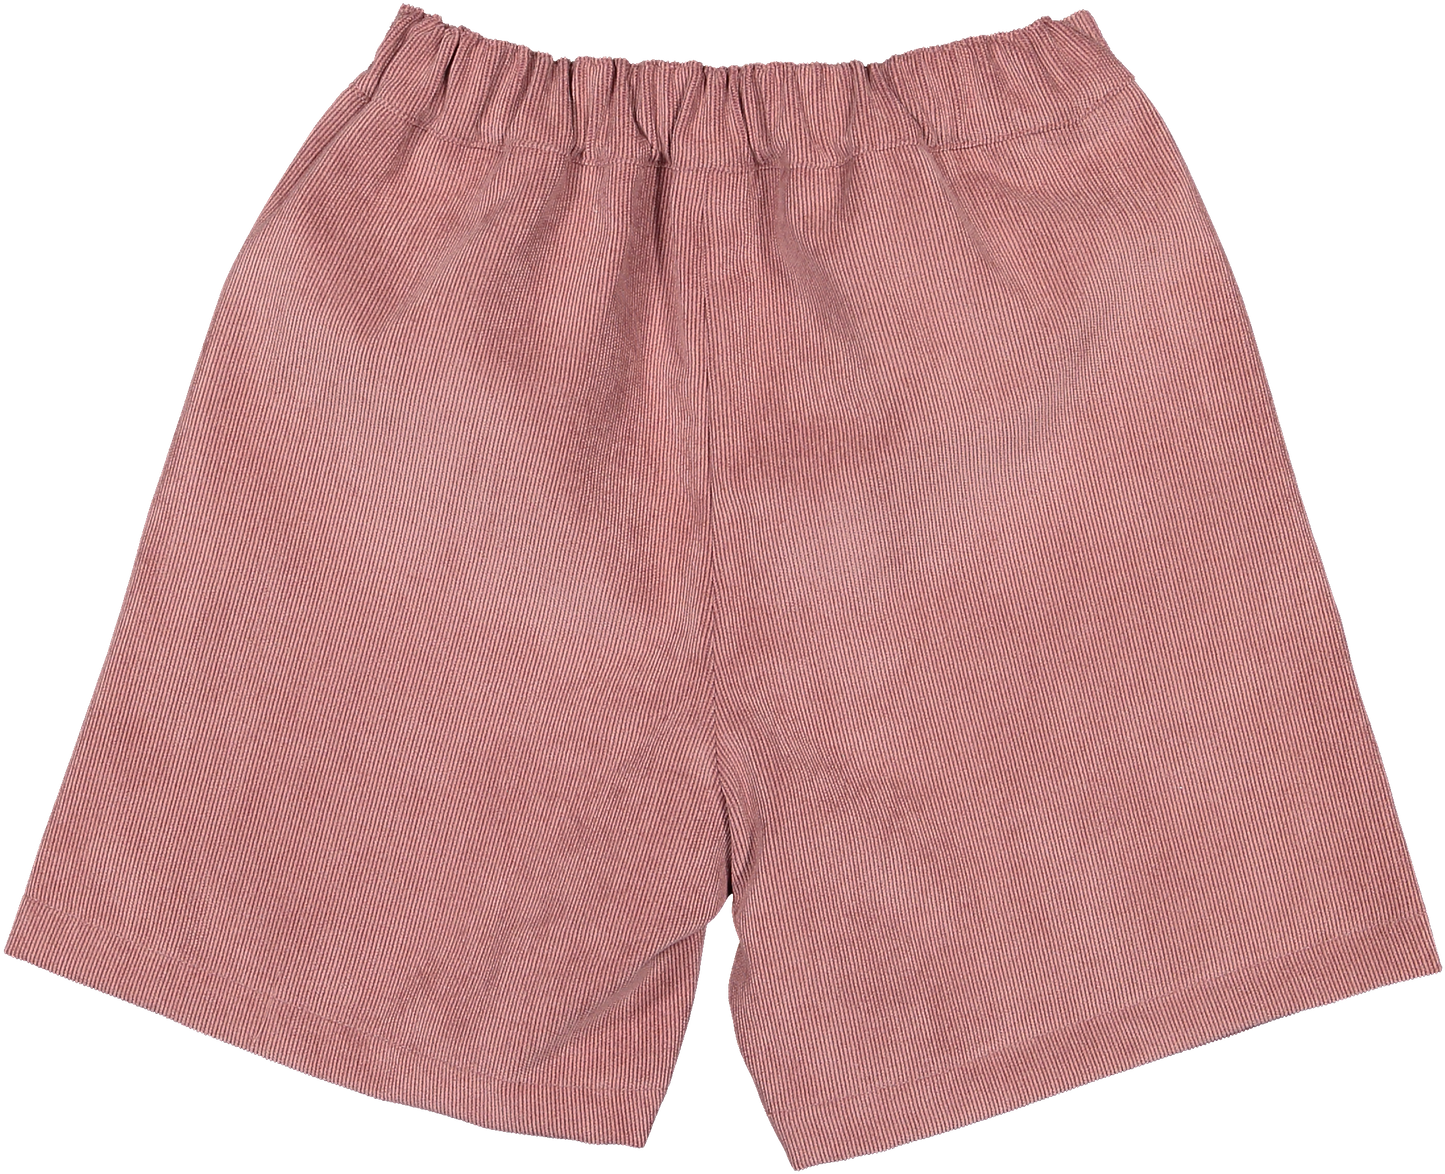 Mauve corduroy girls pleated shorts by Sal & Pimenta.